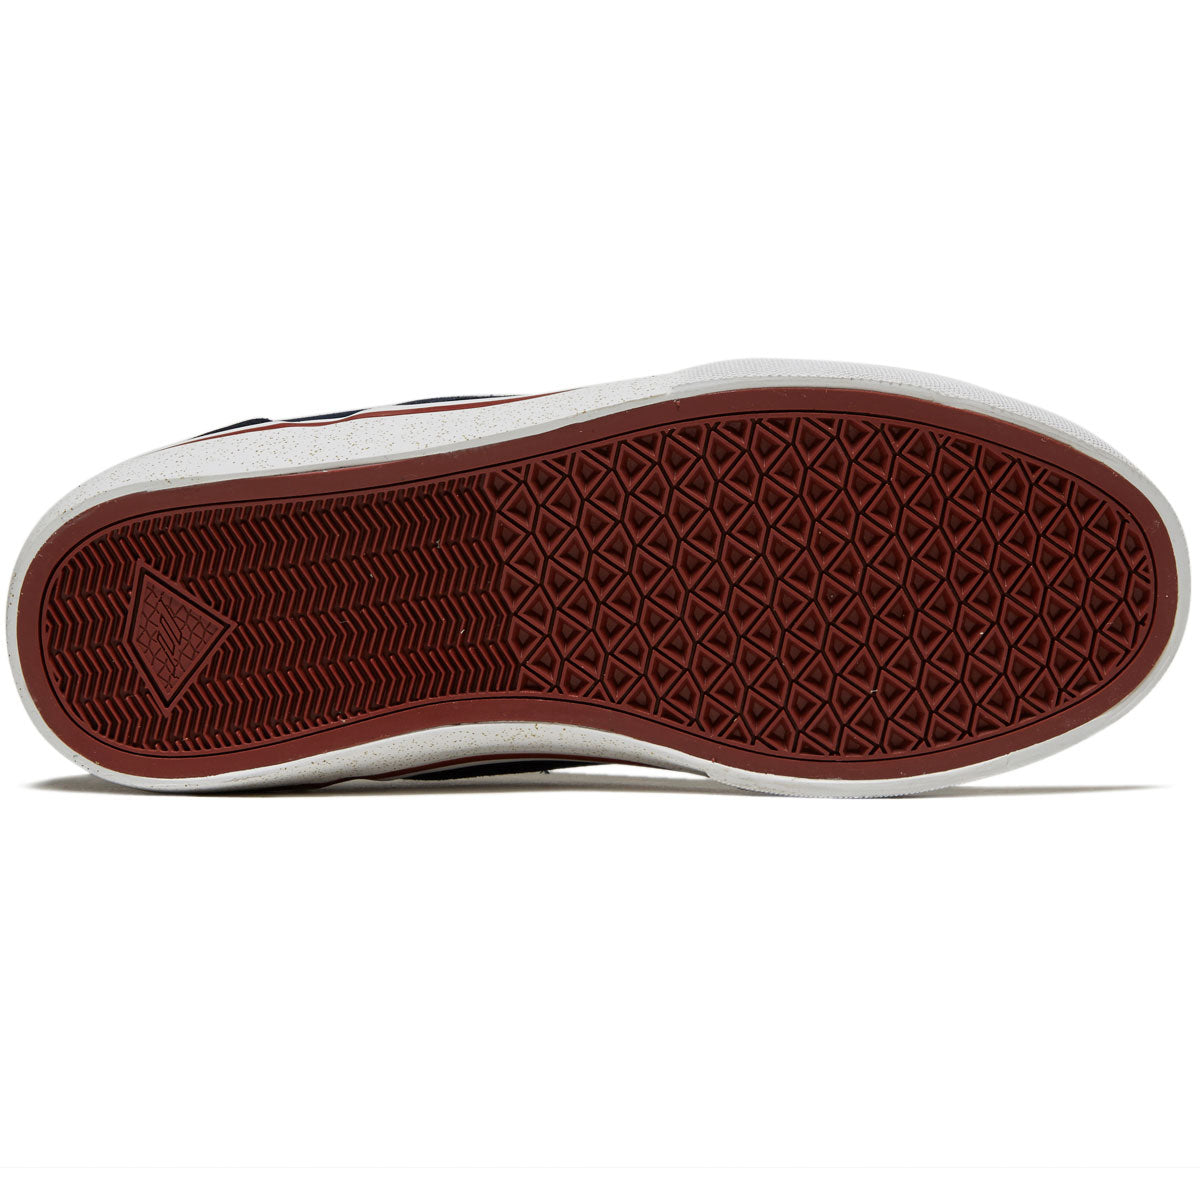 Emerica Wino G6 Slip-on Shoes - Navy/Gold/White image 4